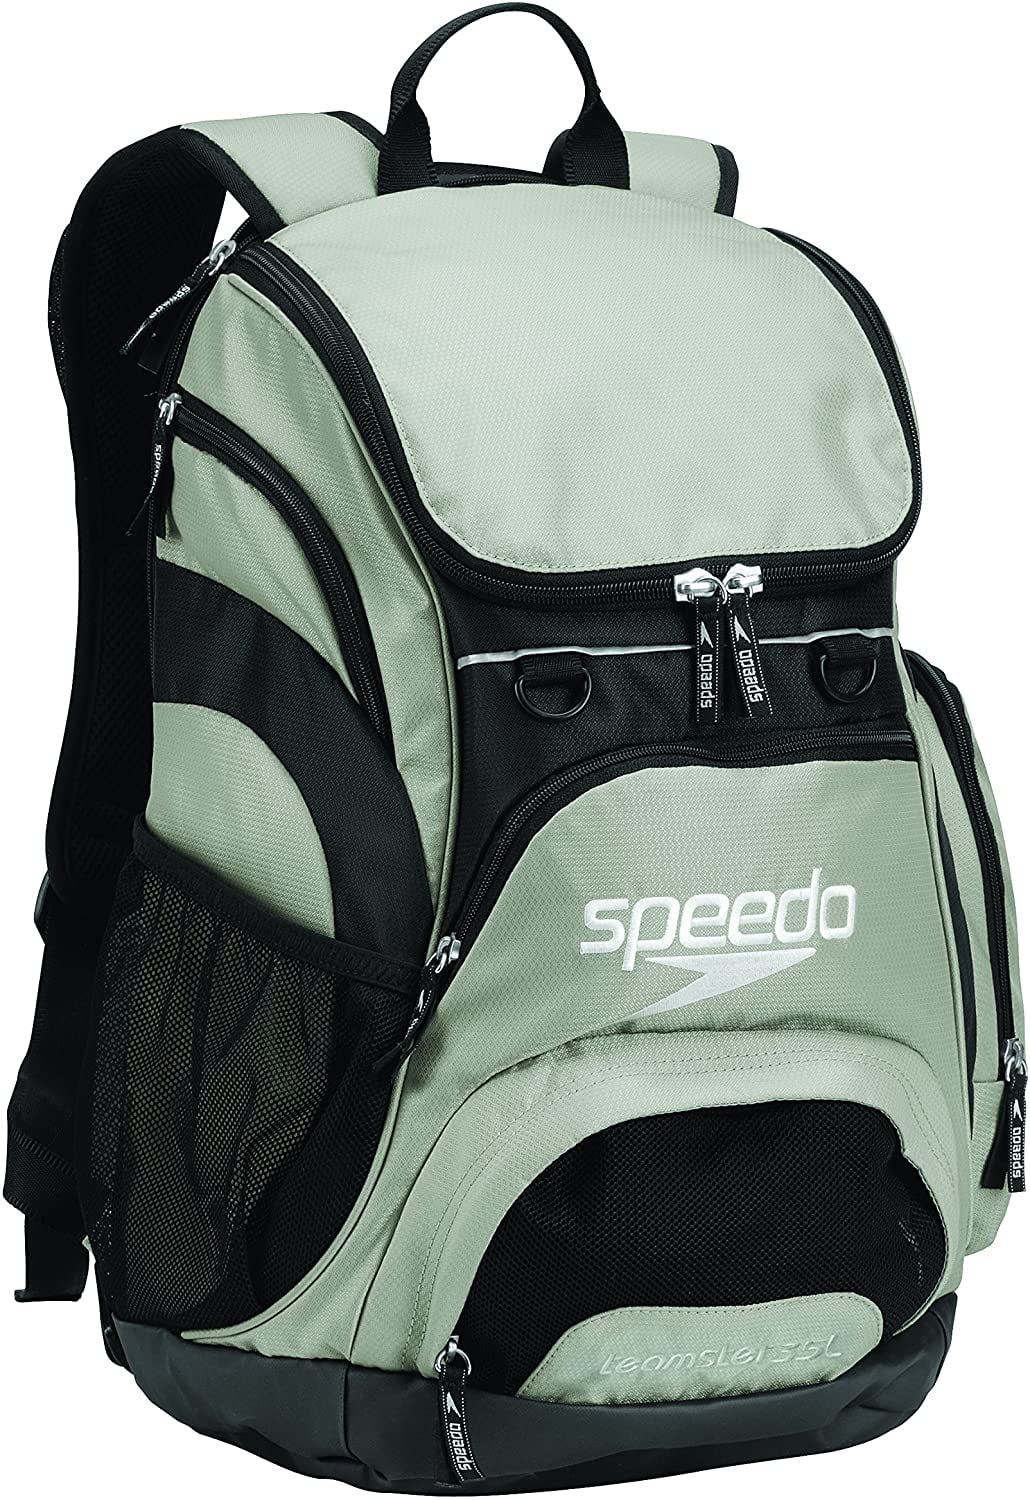 Speedo Unisex-Adult Large Teamster Backpack 35-Liter 